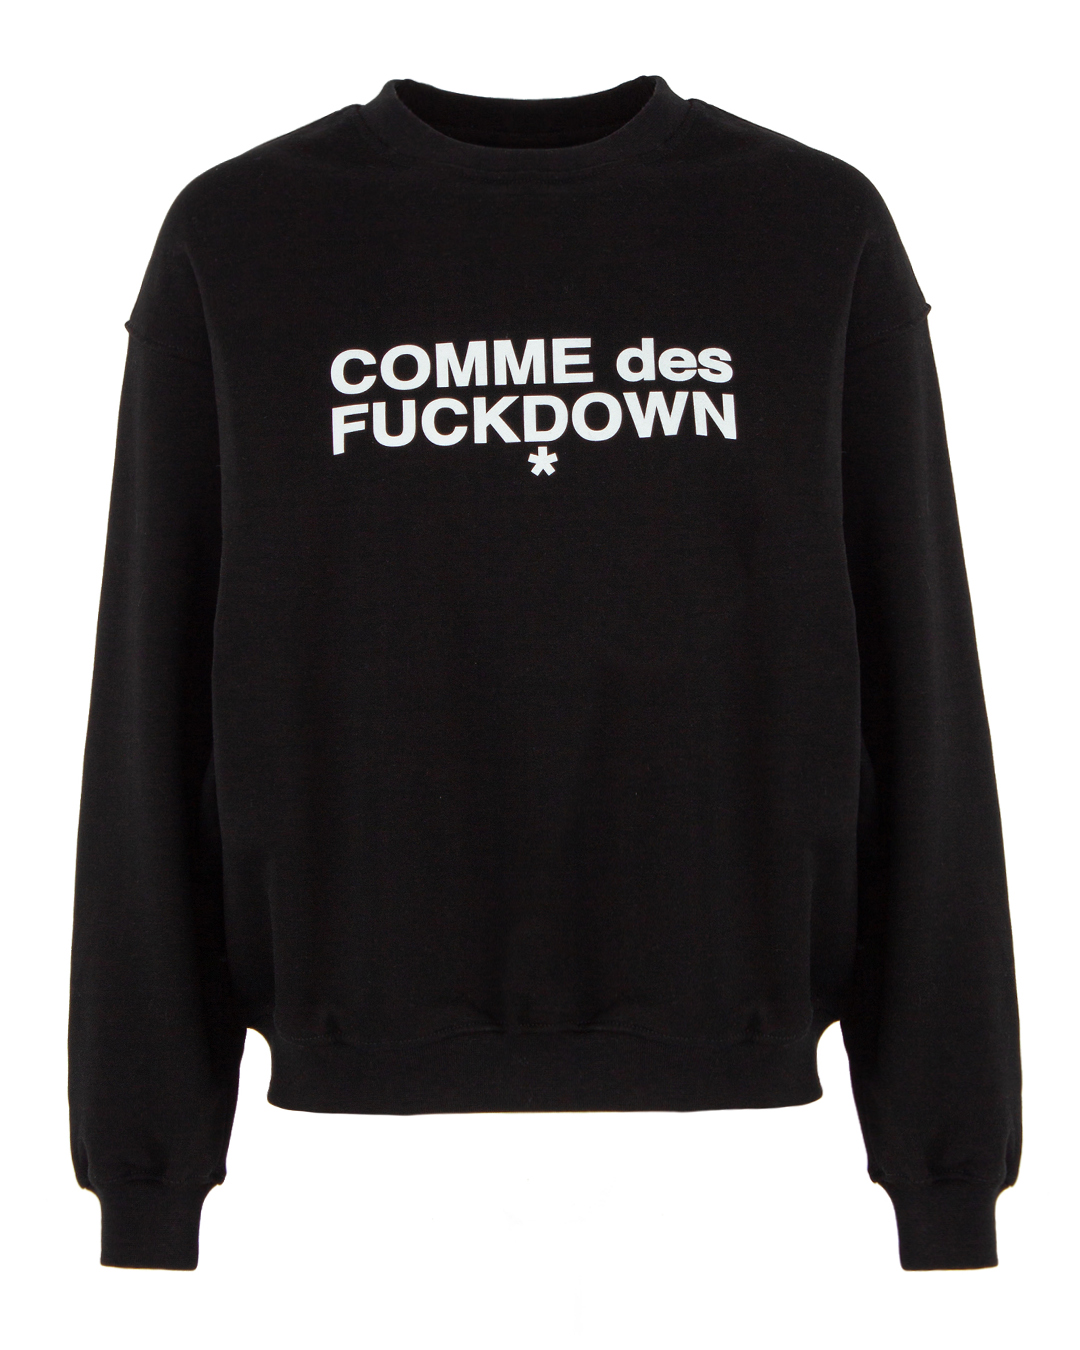 COMME des FUCKDOWN с логотипом бренда  артикул FDW3CDFD3135 марки COMME des FUCKDOWN купить за 17500 руб.